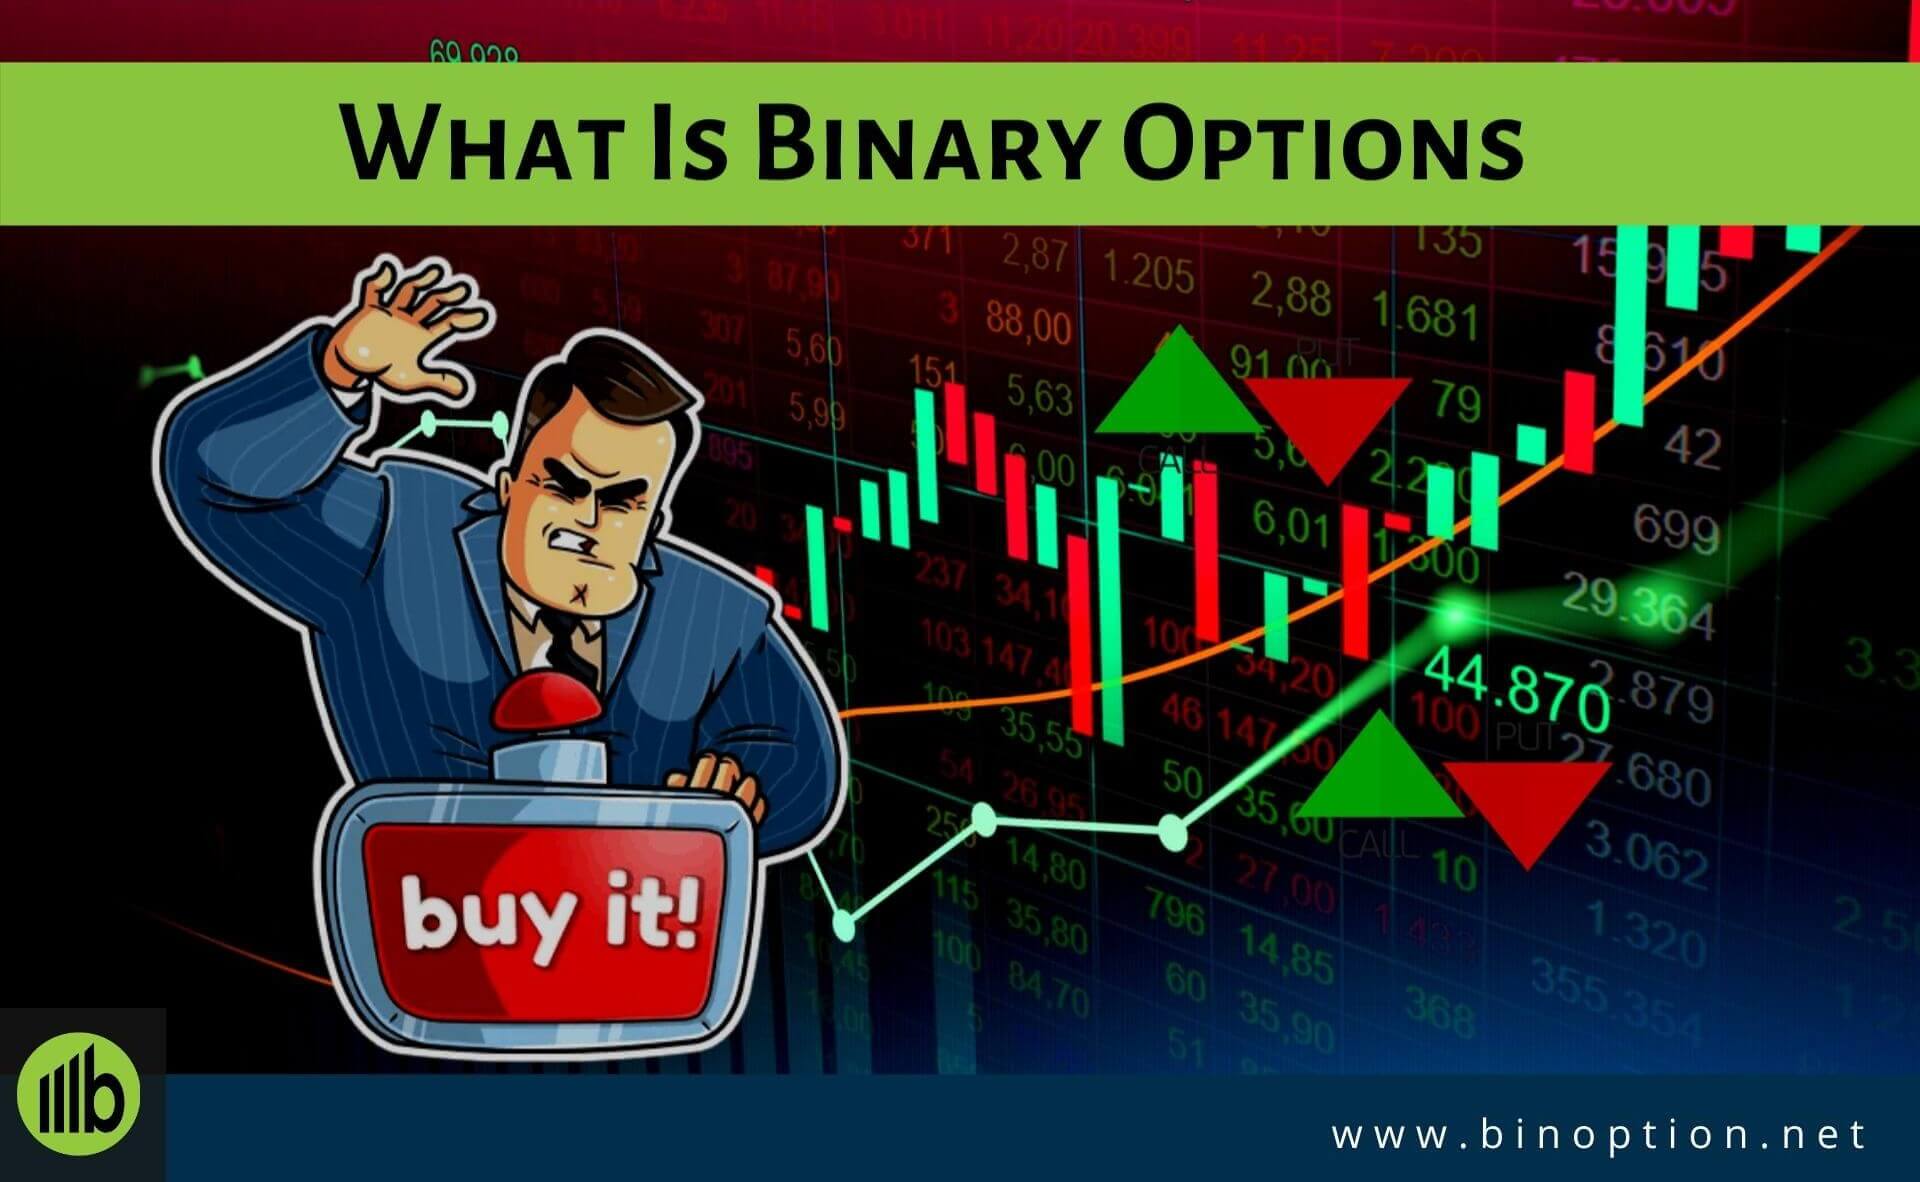 Binary options industry 2020